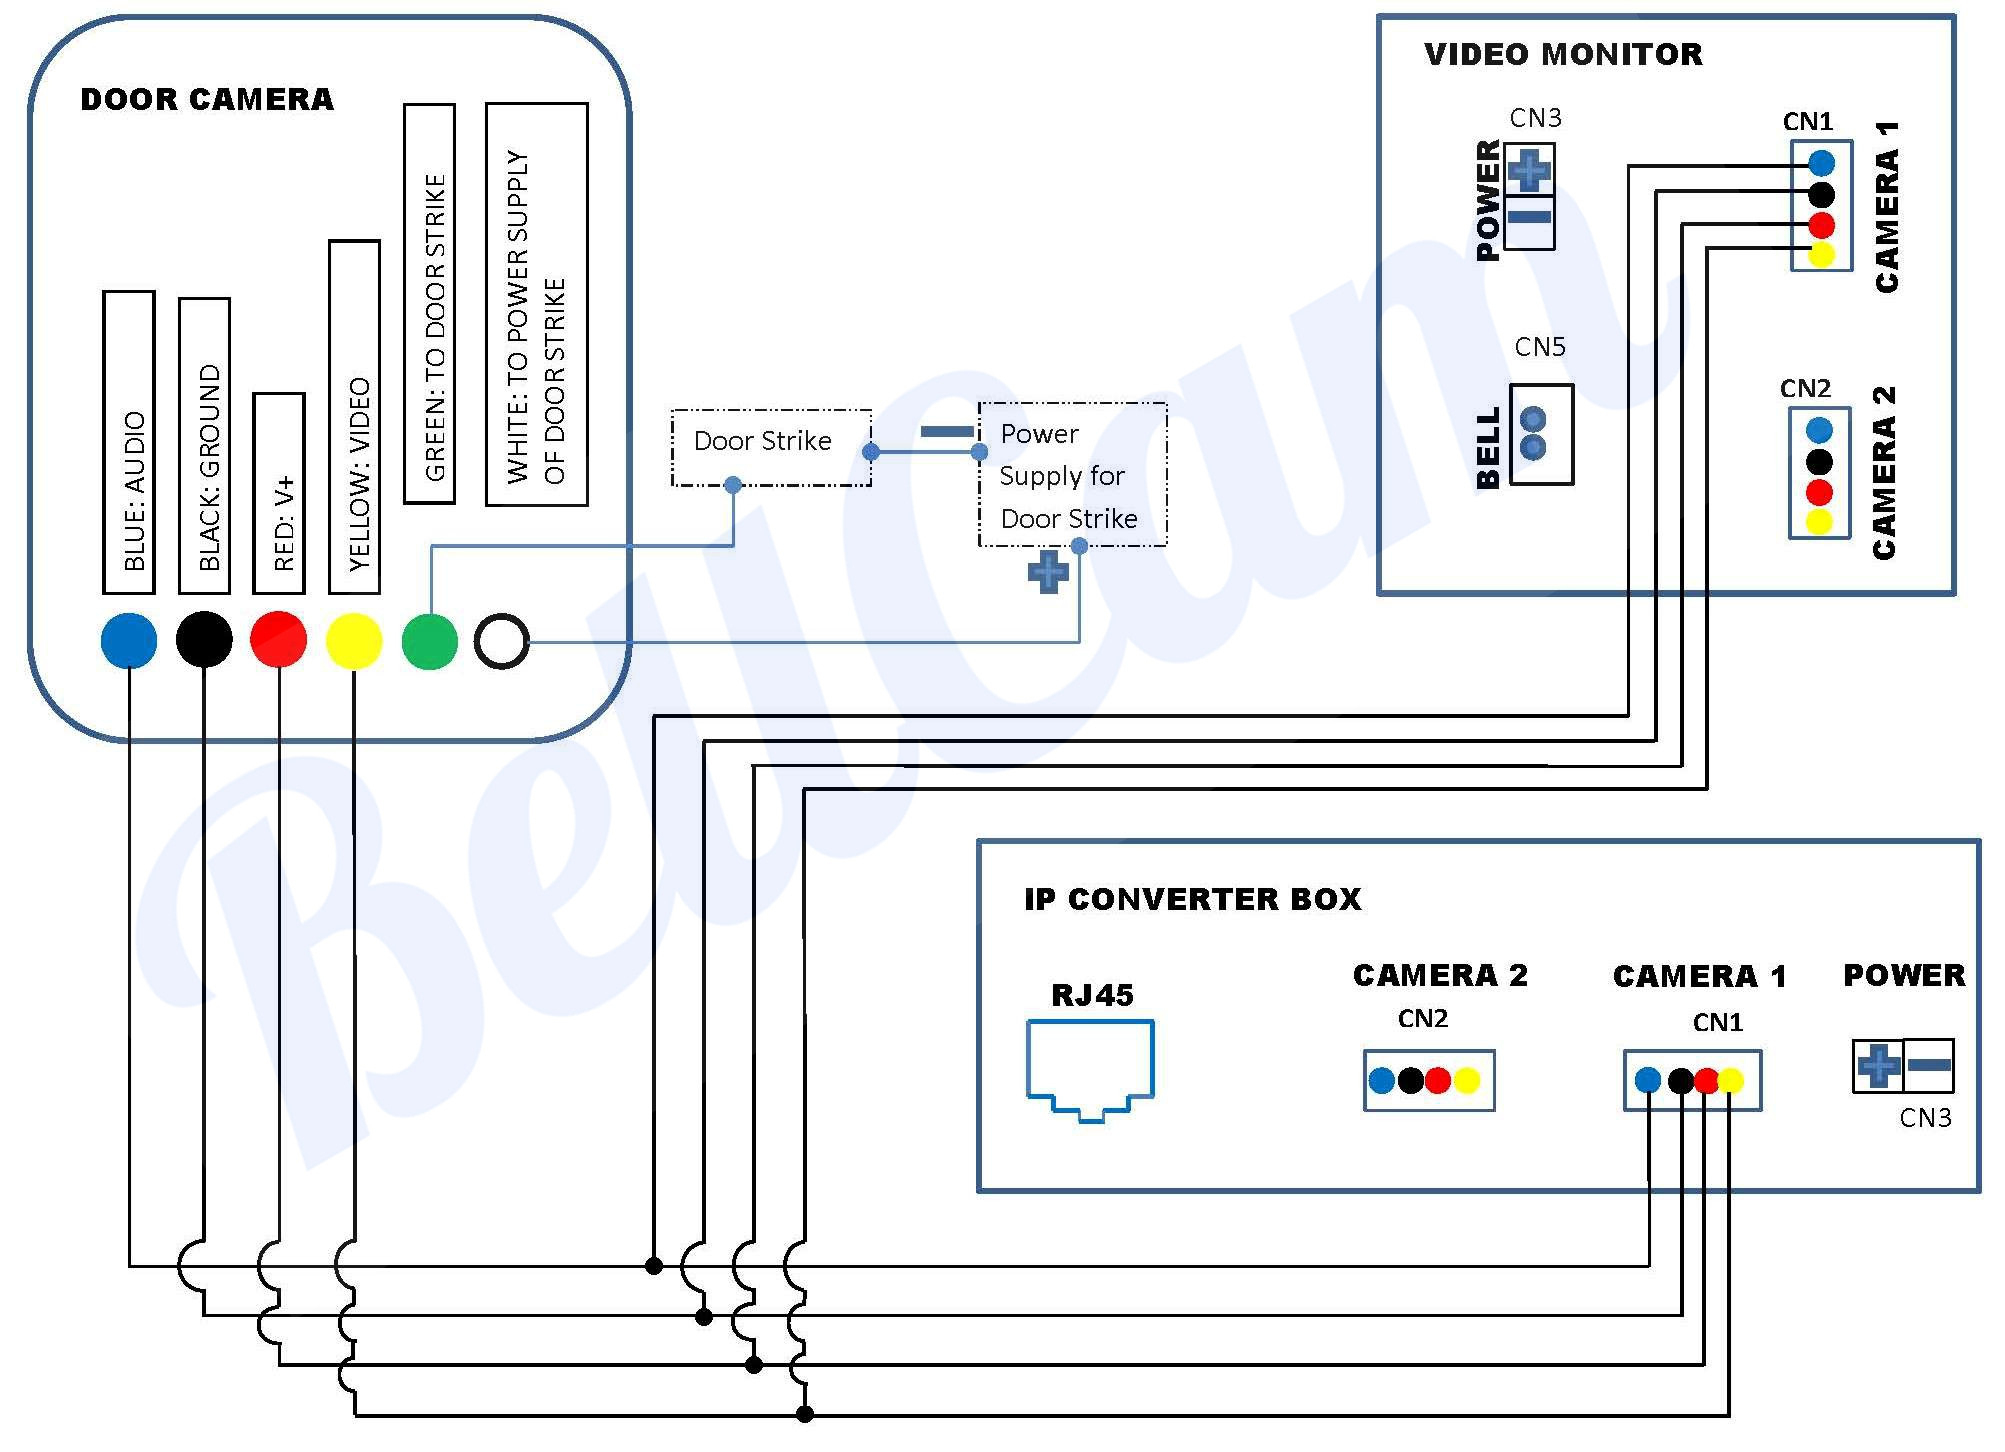 Item 47546 Wiring Diagram - All Wiring Diagram - Bunker Hill Security Camera Wiring Diagram